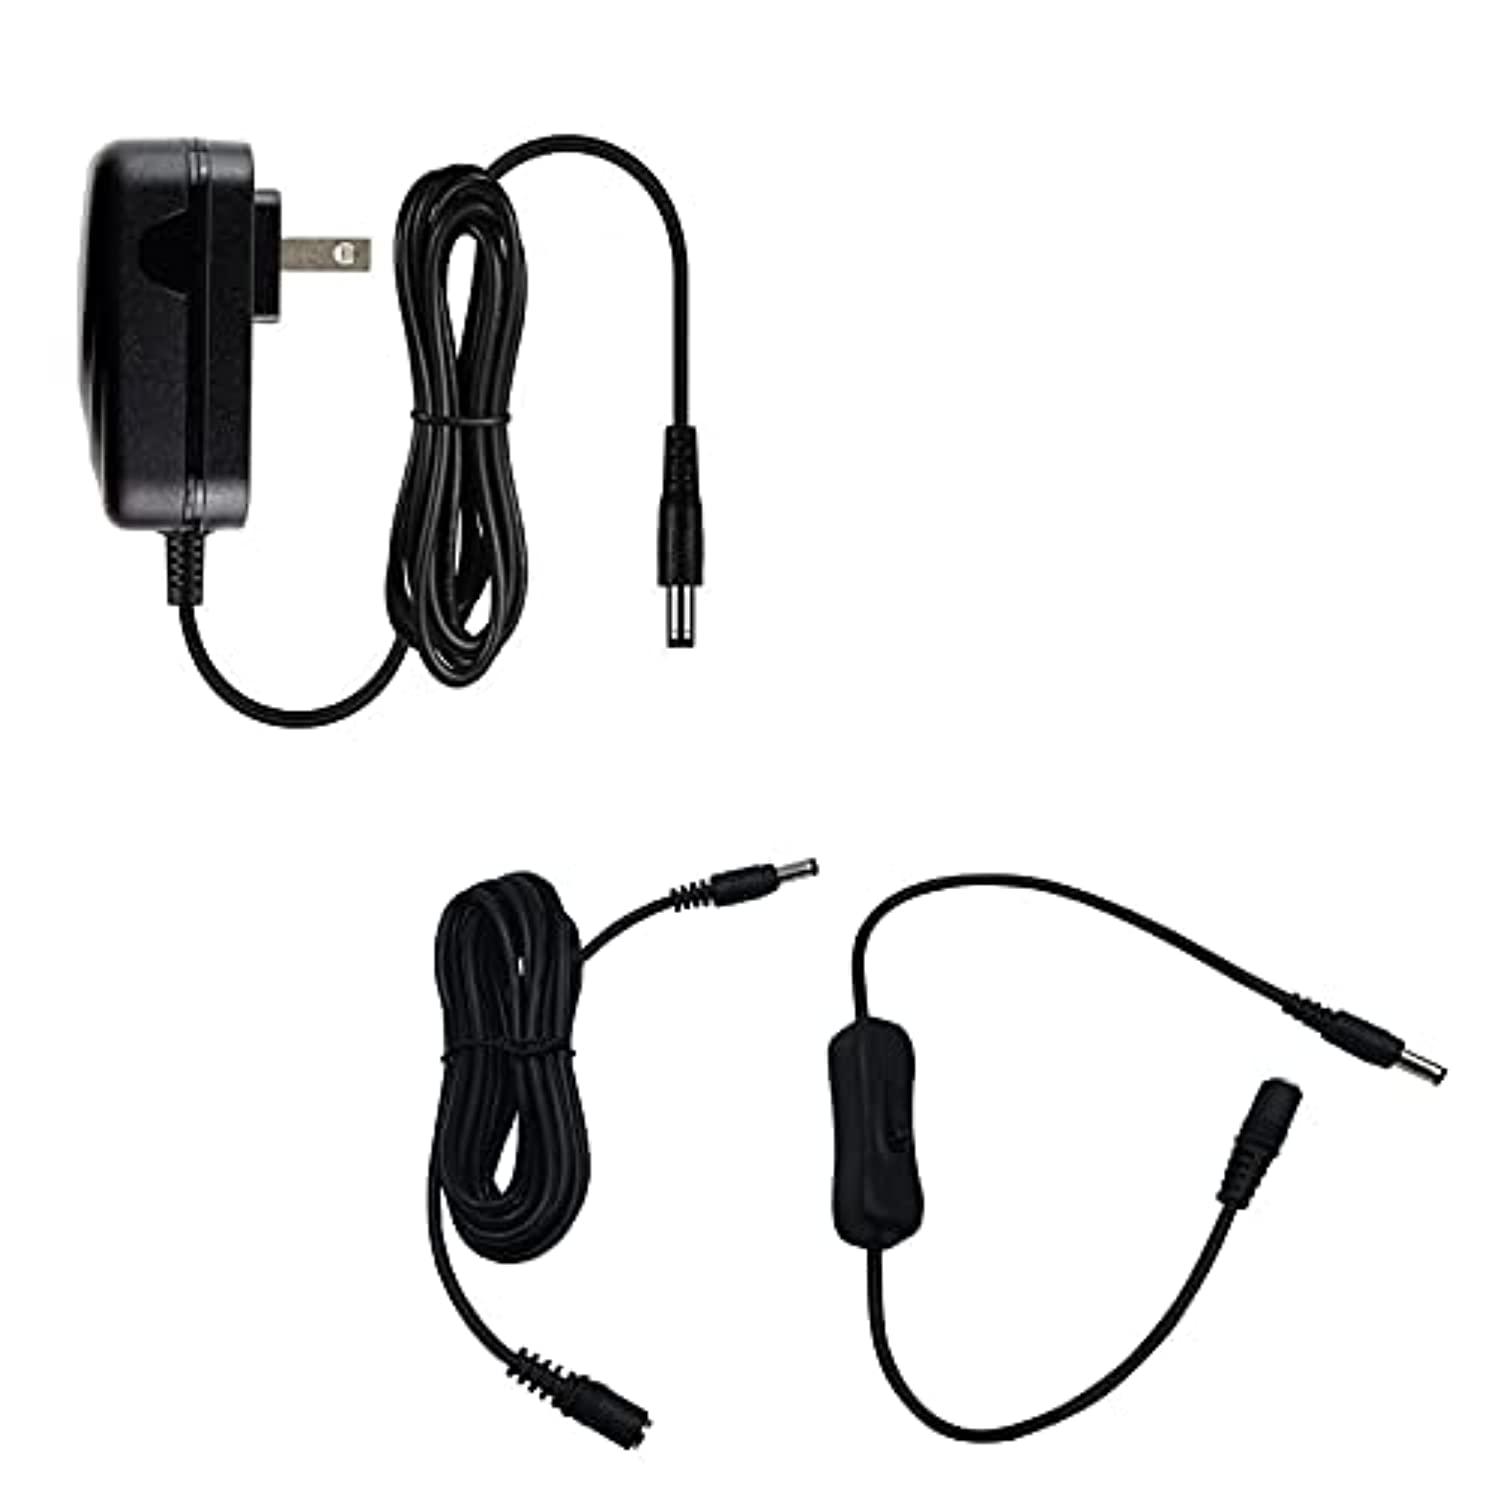 myvolts 5v power supply adaptor replacement for kodak v1073 digital camera - us plug - premium